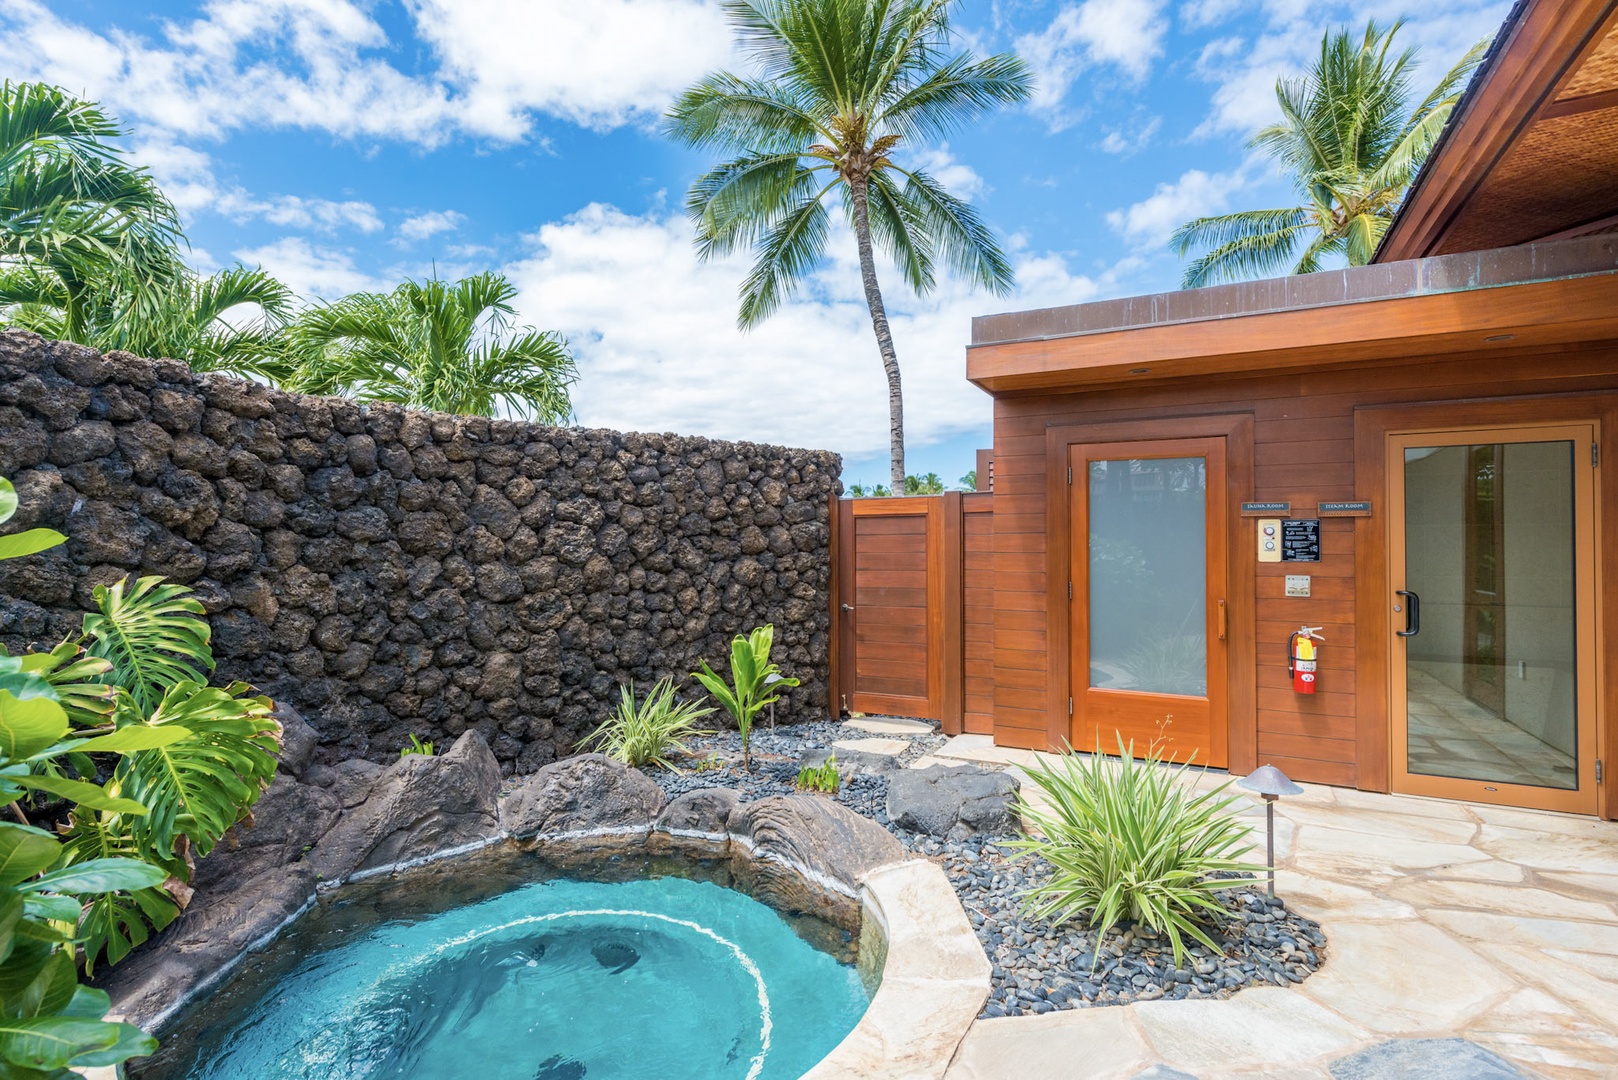 Kamuela Vacation Rentals, 3BD Na Hale 3 at Pauoa Beach Club at Mauna Lani Resort - Pauoa Beach Club Amenities Center offers a hot tub, sauna, and steam room